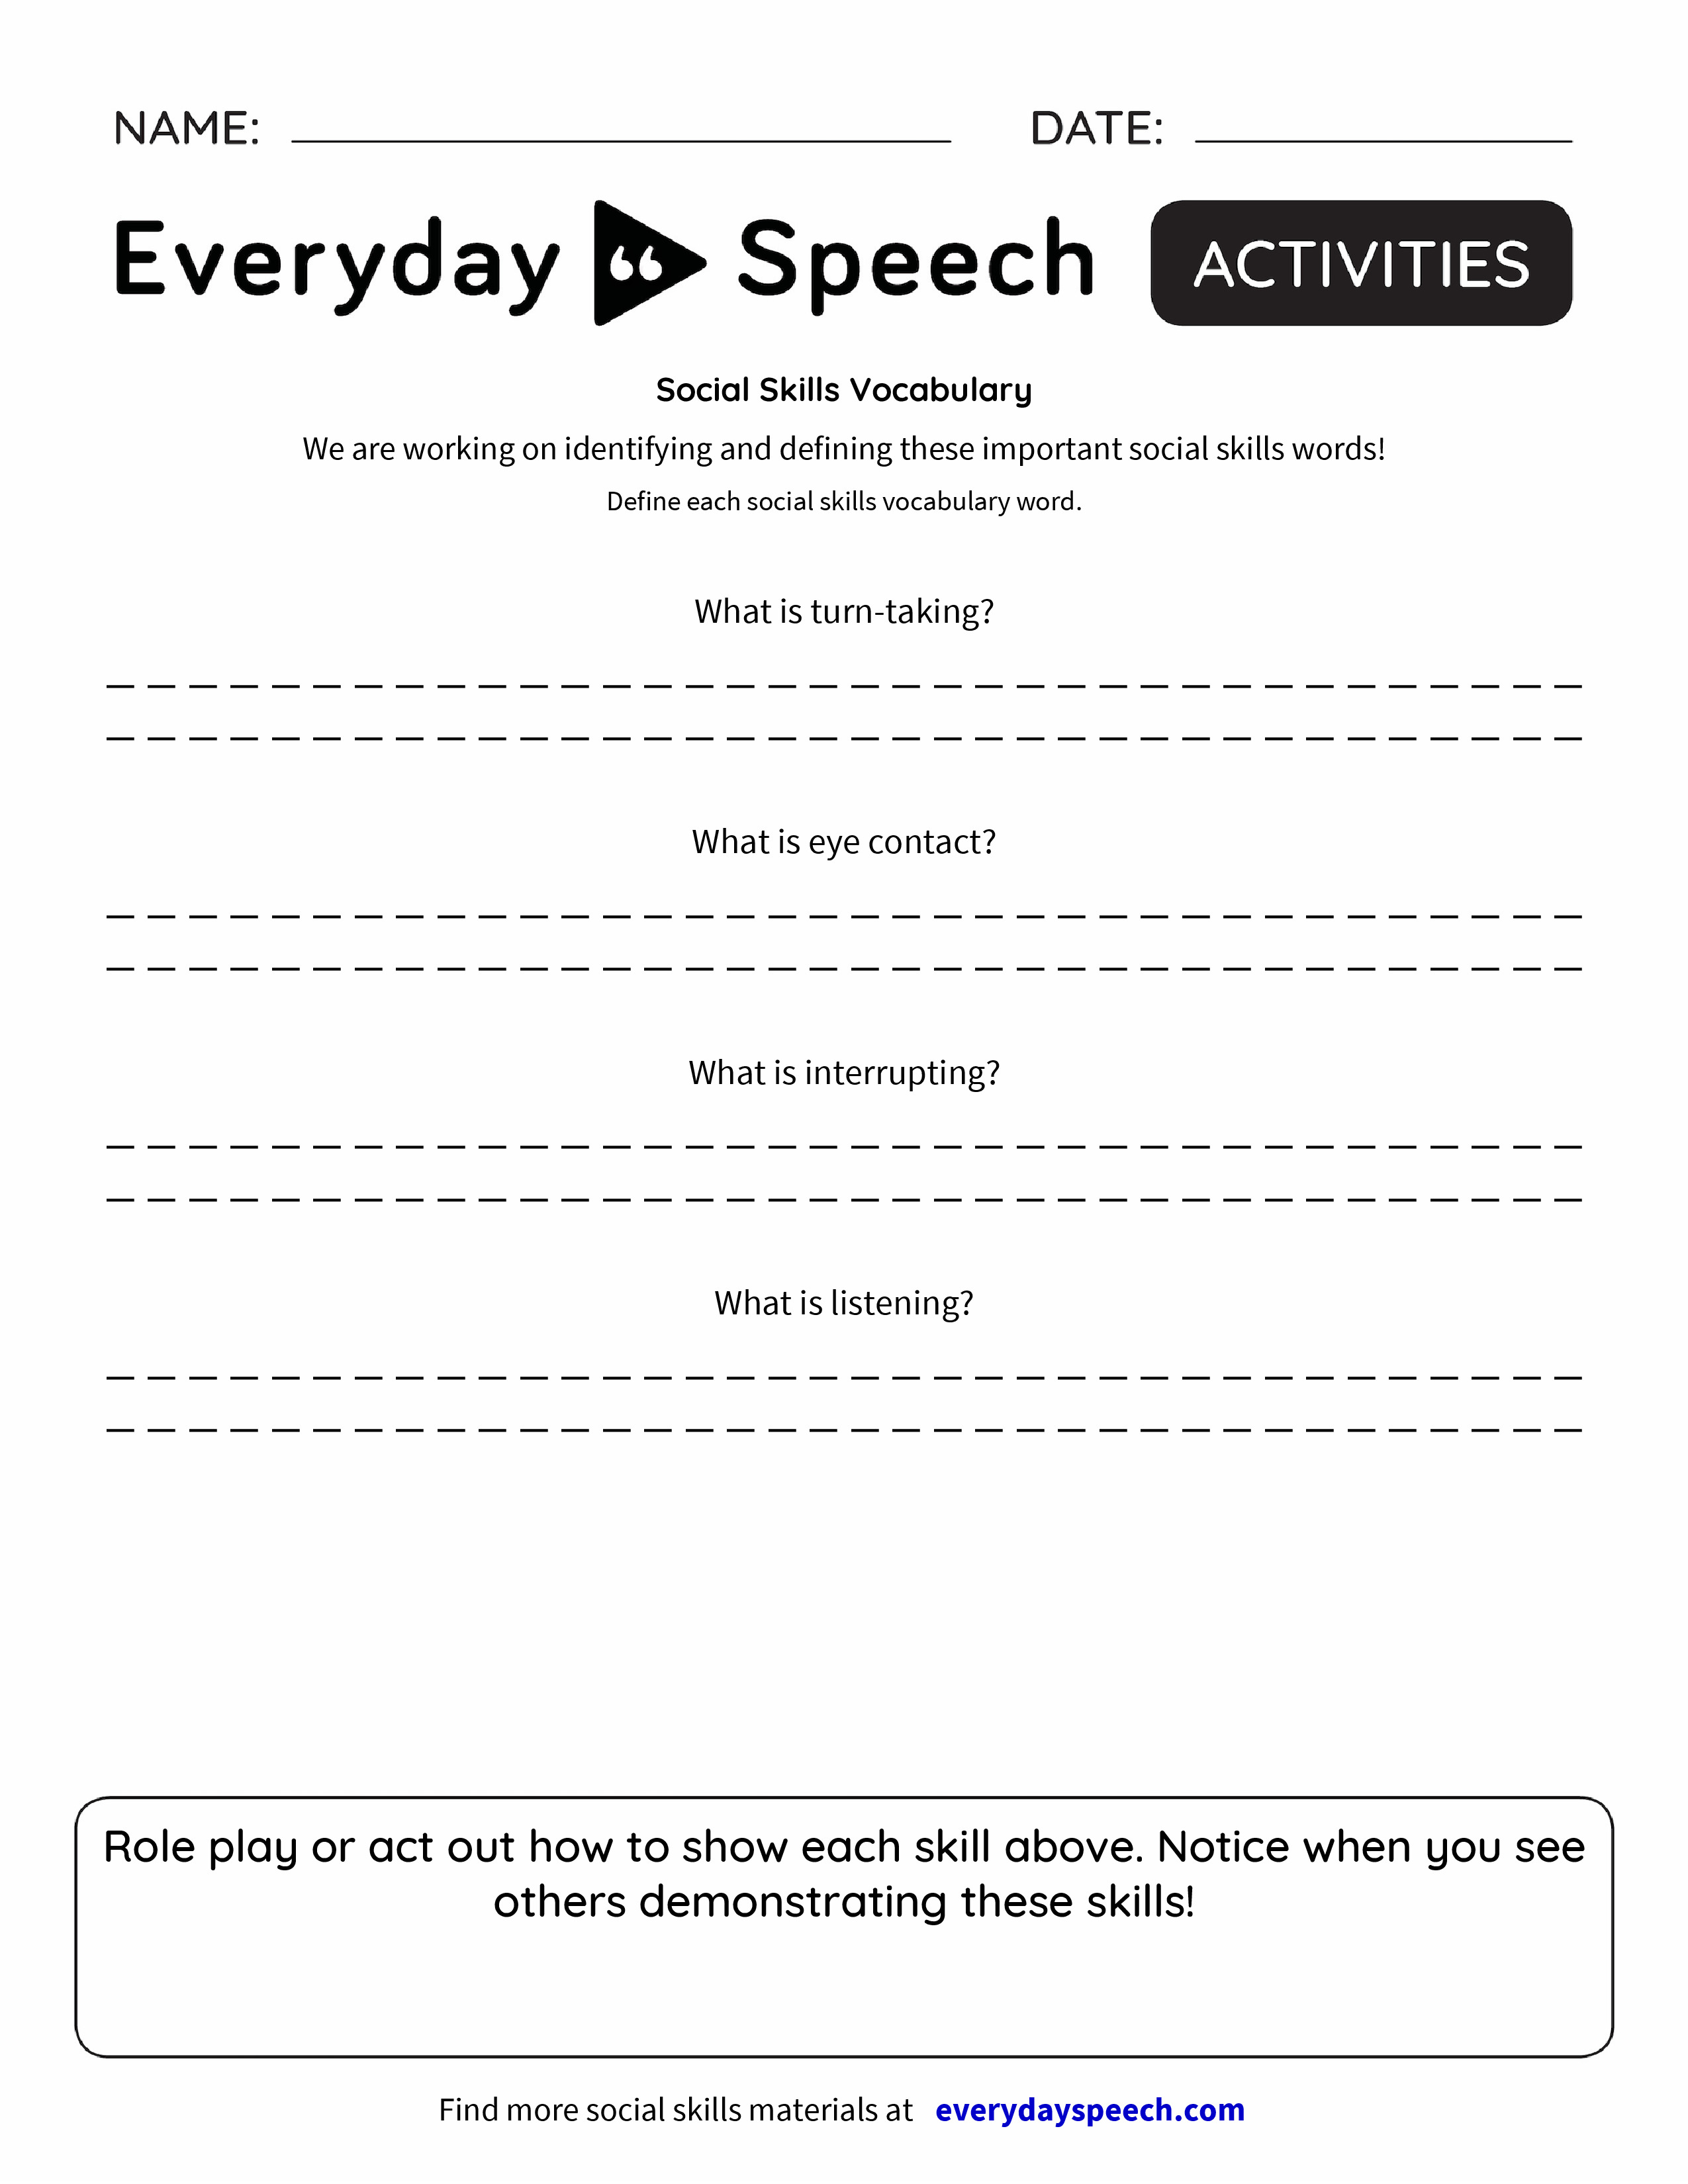 Social Skills Vocabulary Everyday Speech Everyday Speech